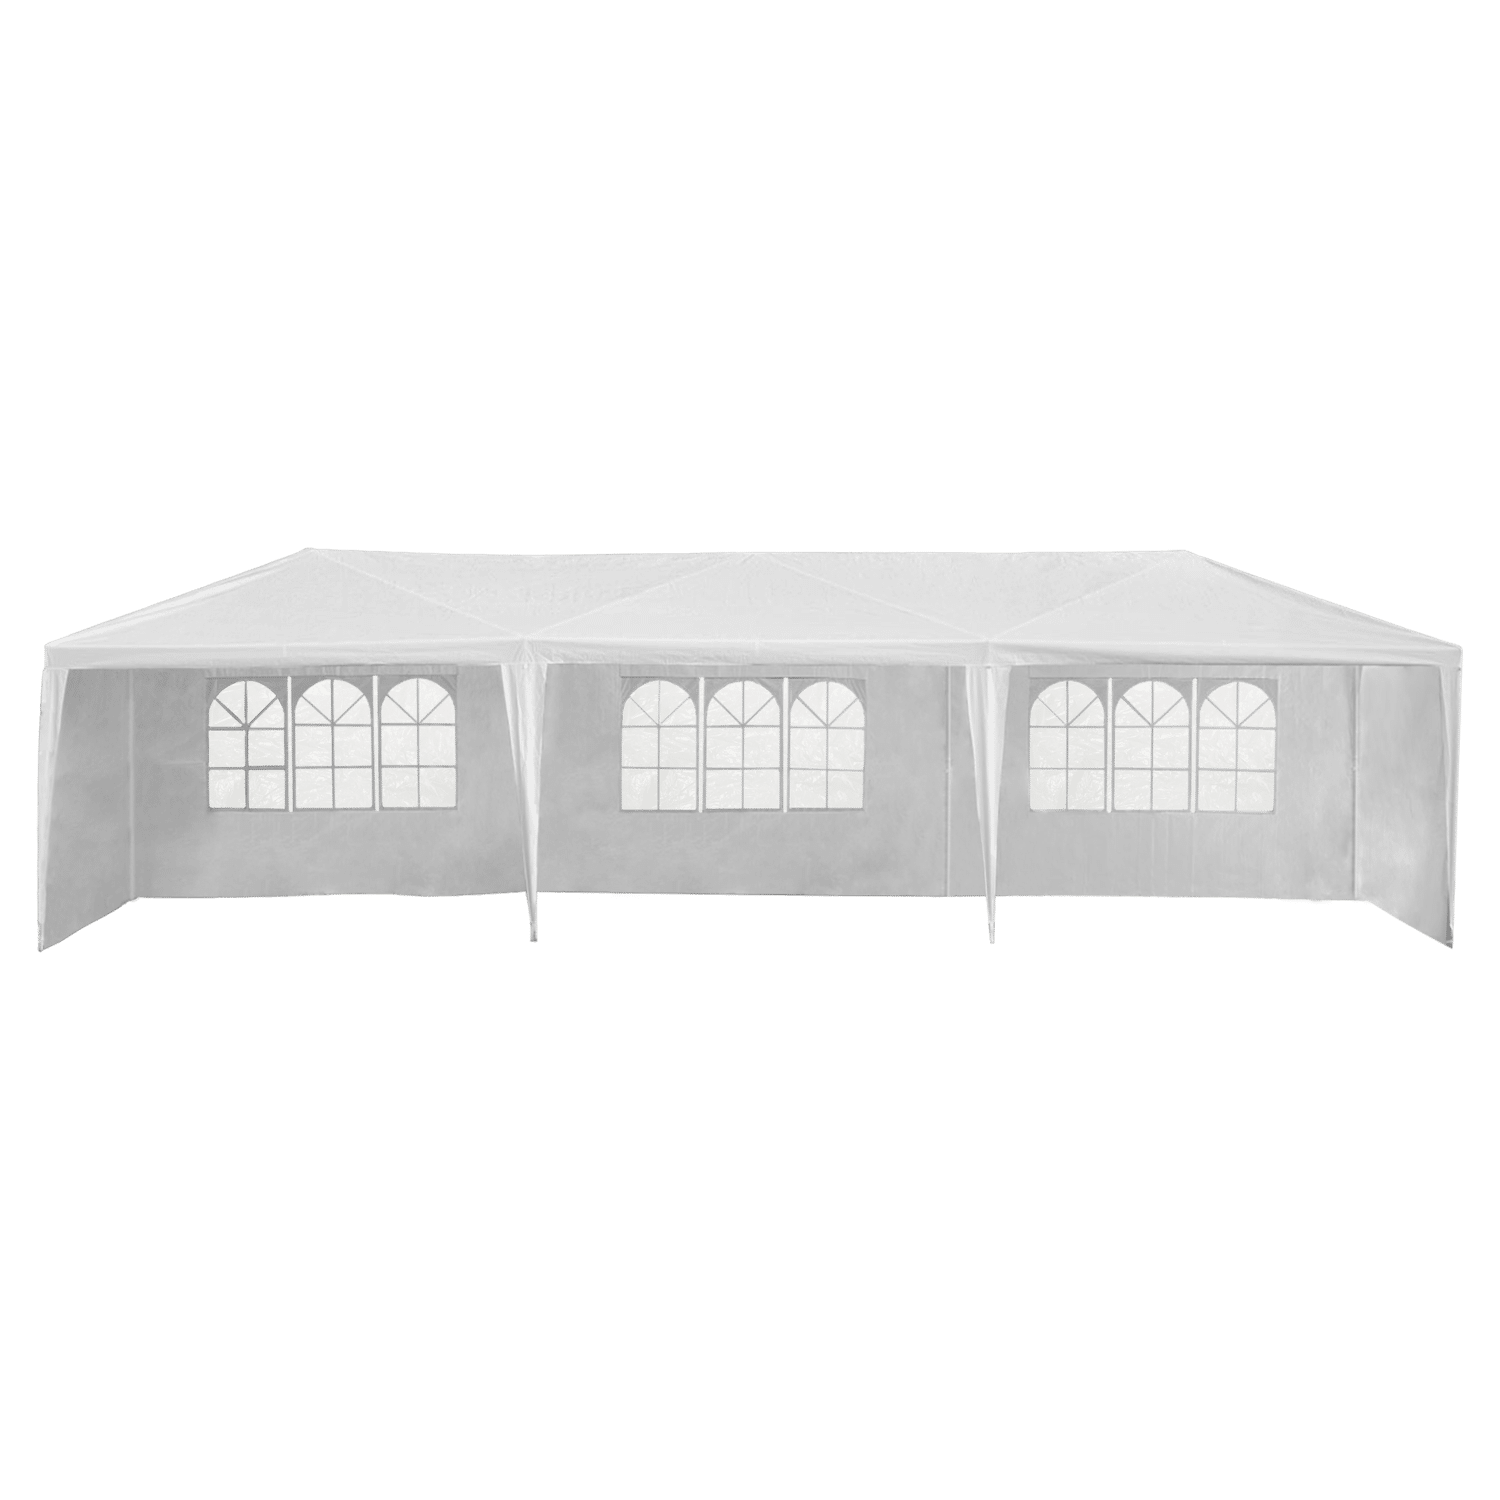 Tenda per ricevimenti 3 × 9 m ALIZÉ